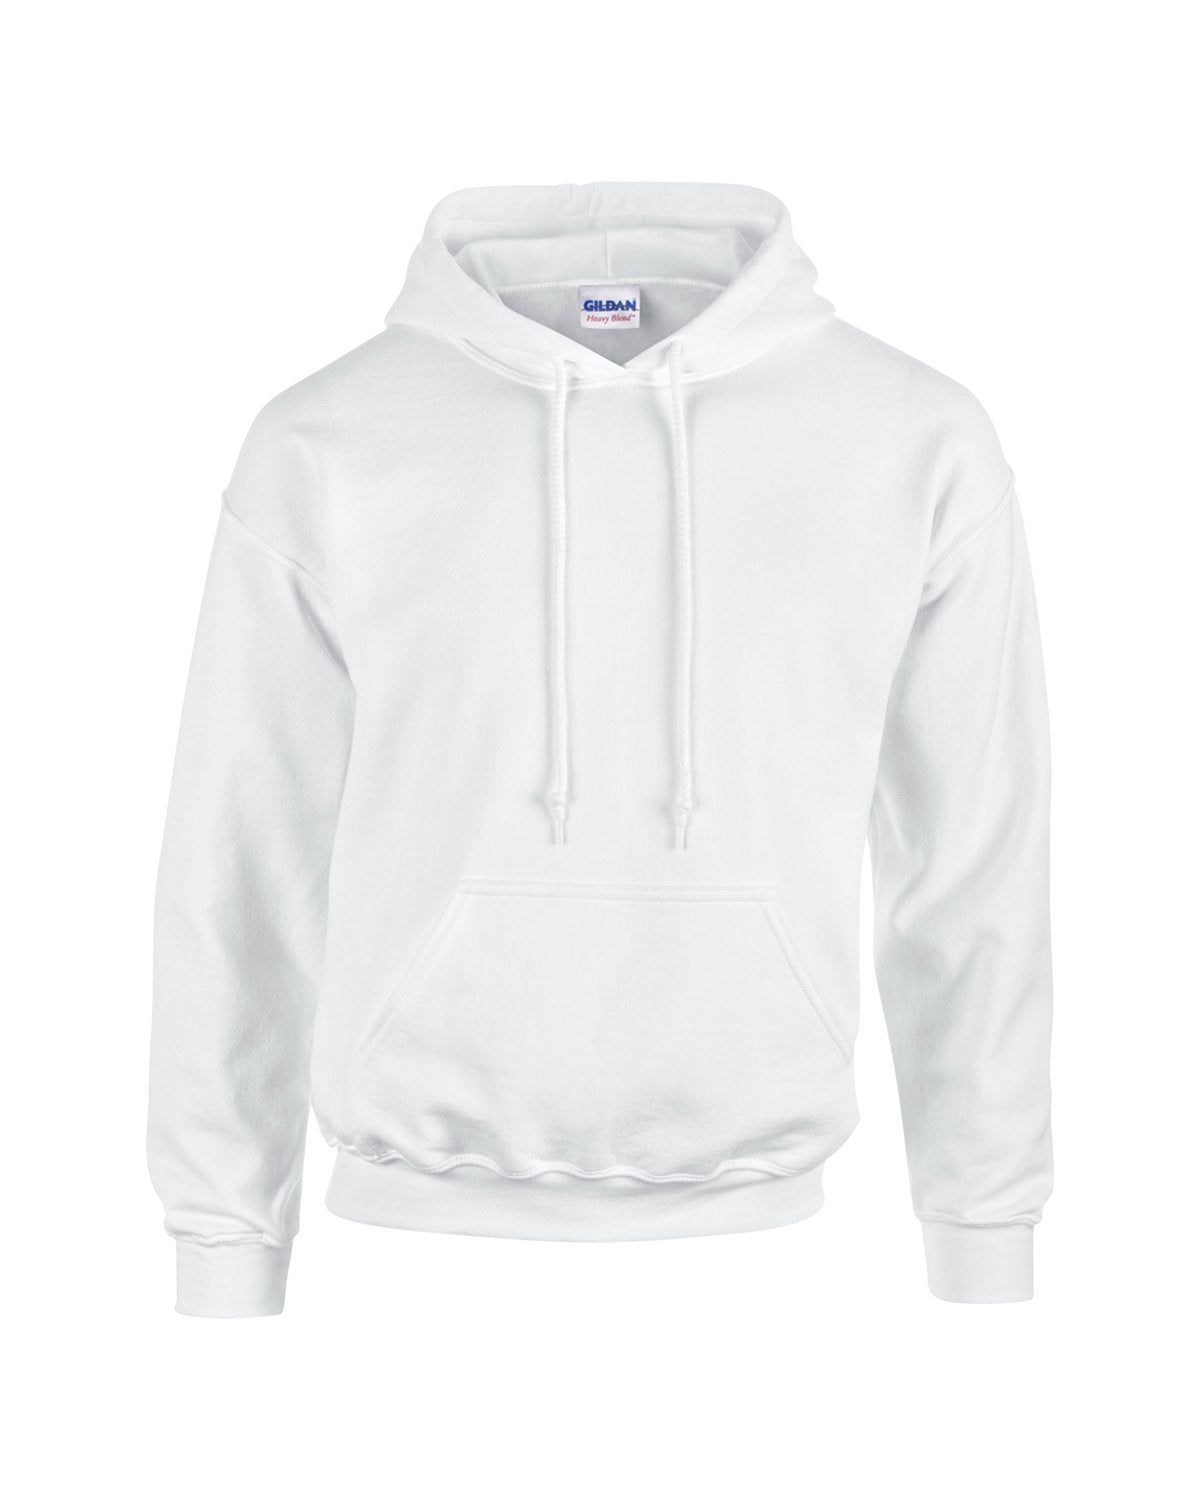 White - Gildan 18500 Heavy Blend Hooded Sweatshirt